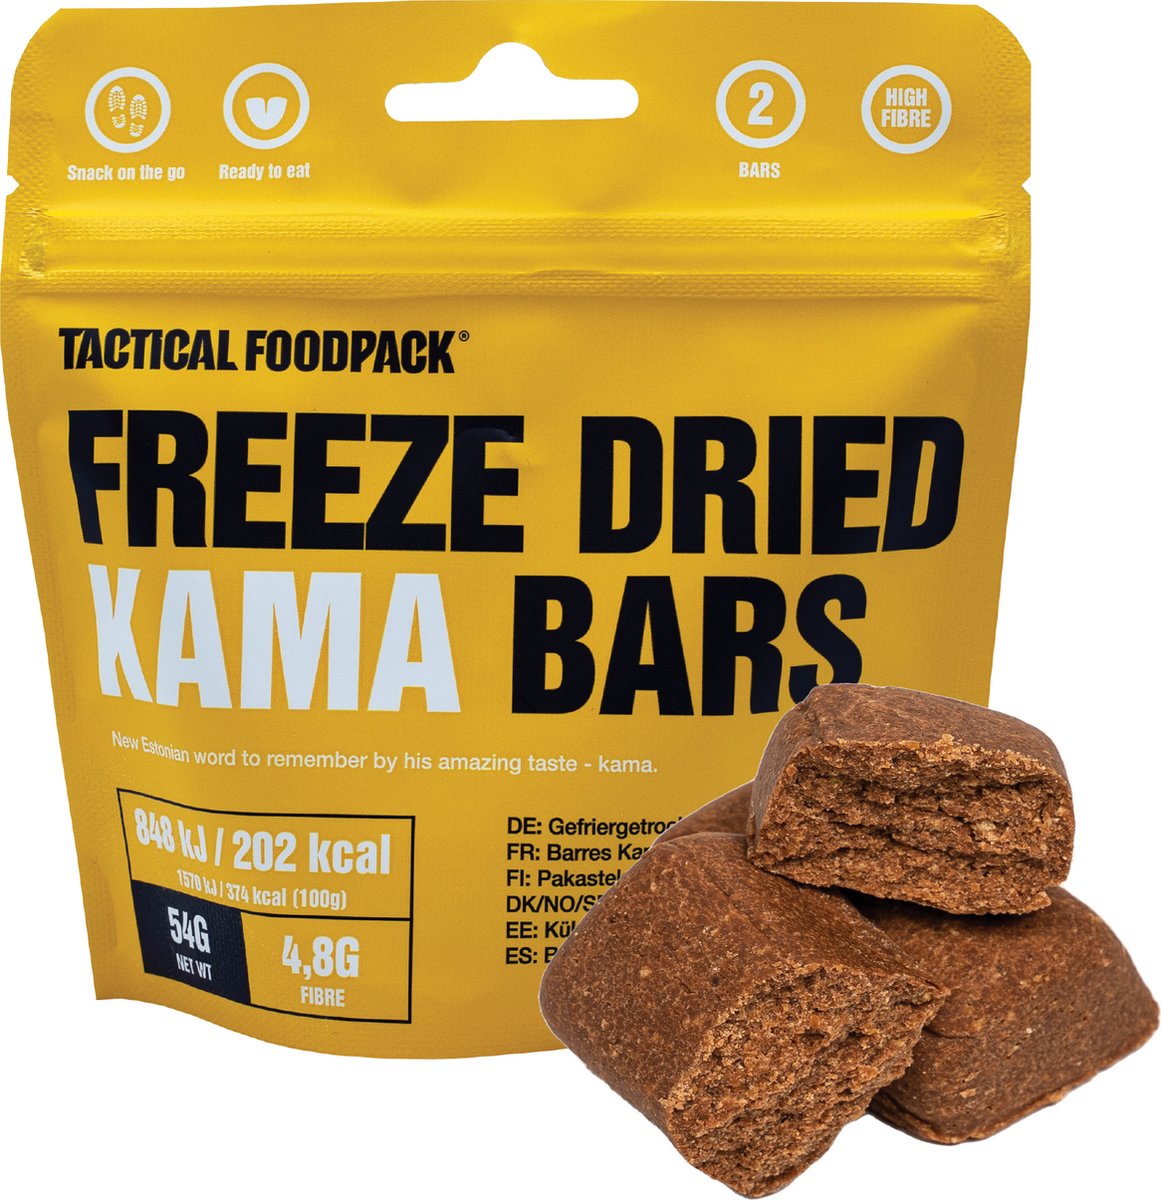 Tactical FoodPack Freeze-Dried Kama Bars (54g) - Estlandse Kama Repen (hop, rogge, havermout en erwtenmeel) - 202kcal - buitensportvoeding - outdoorsnack - vriesdroog - survival eten - prepper - 8 jaar houdbaar - snackverpakking